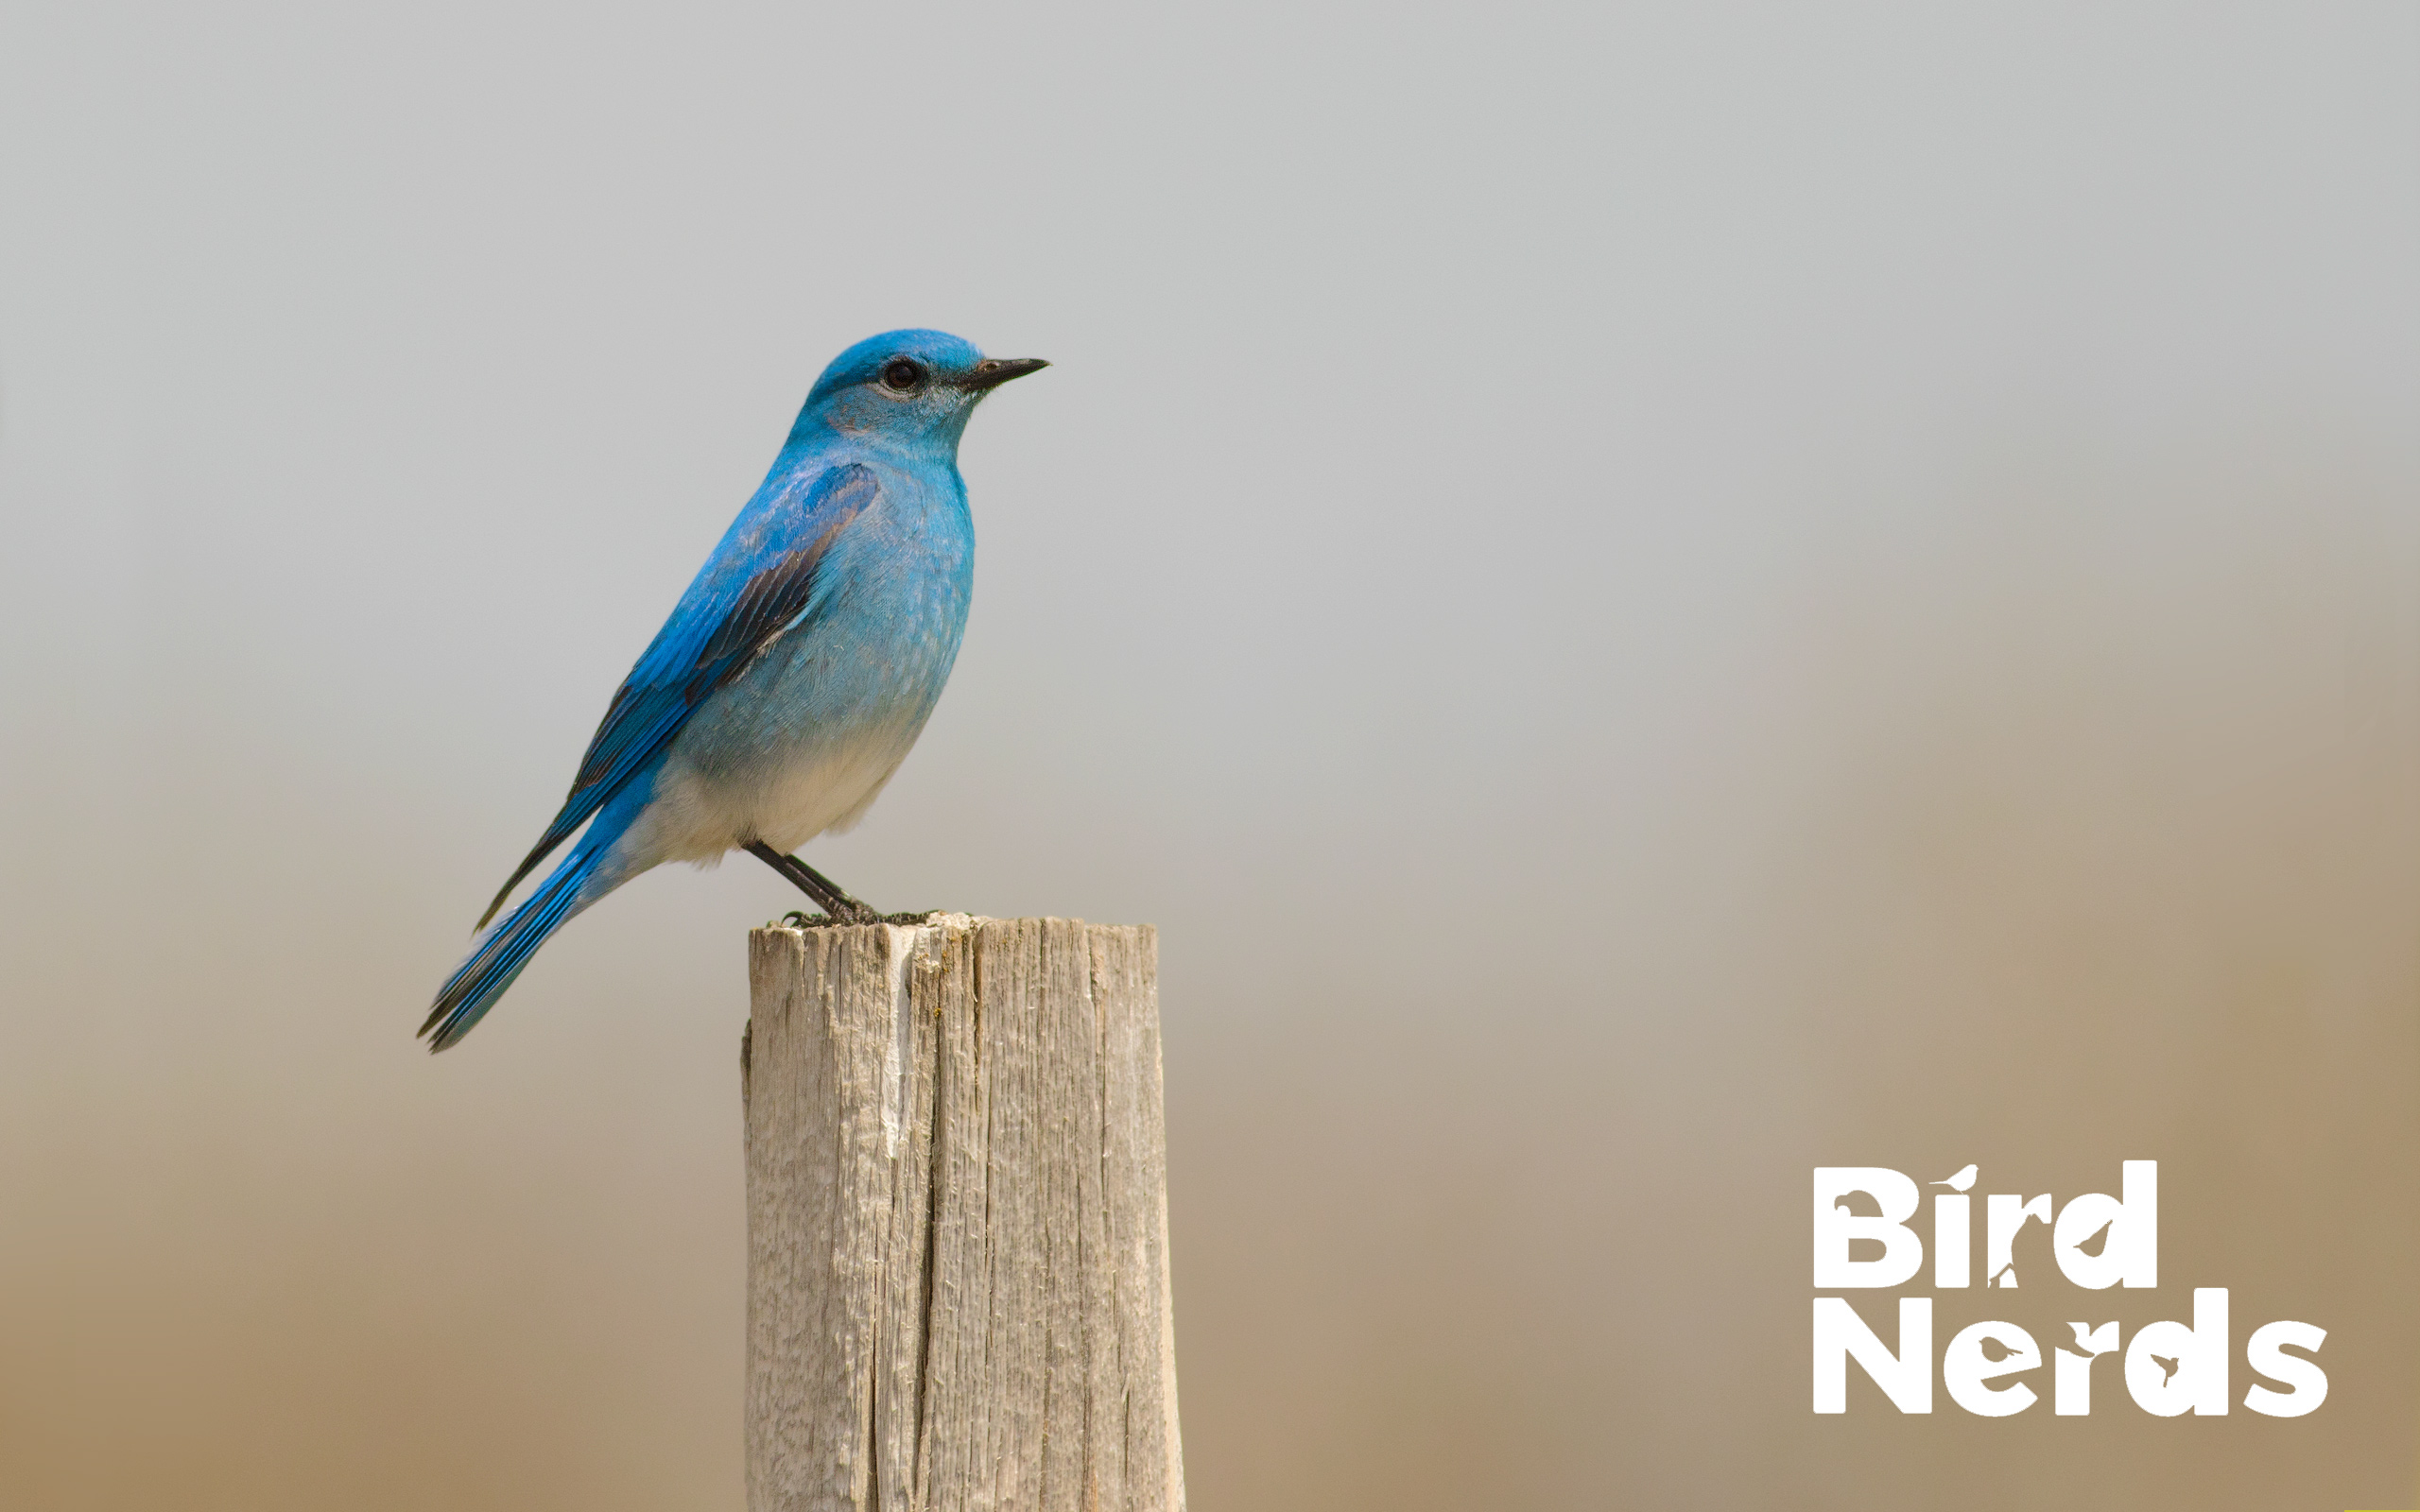 Mountain bluebird on a fence post taken in the Alberta foothills. 